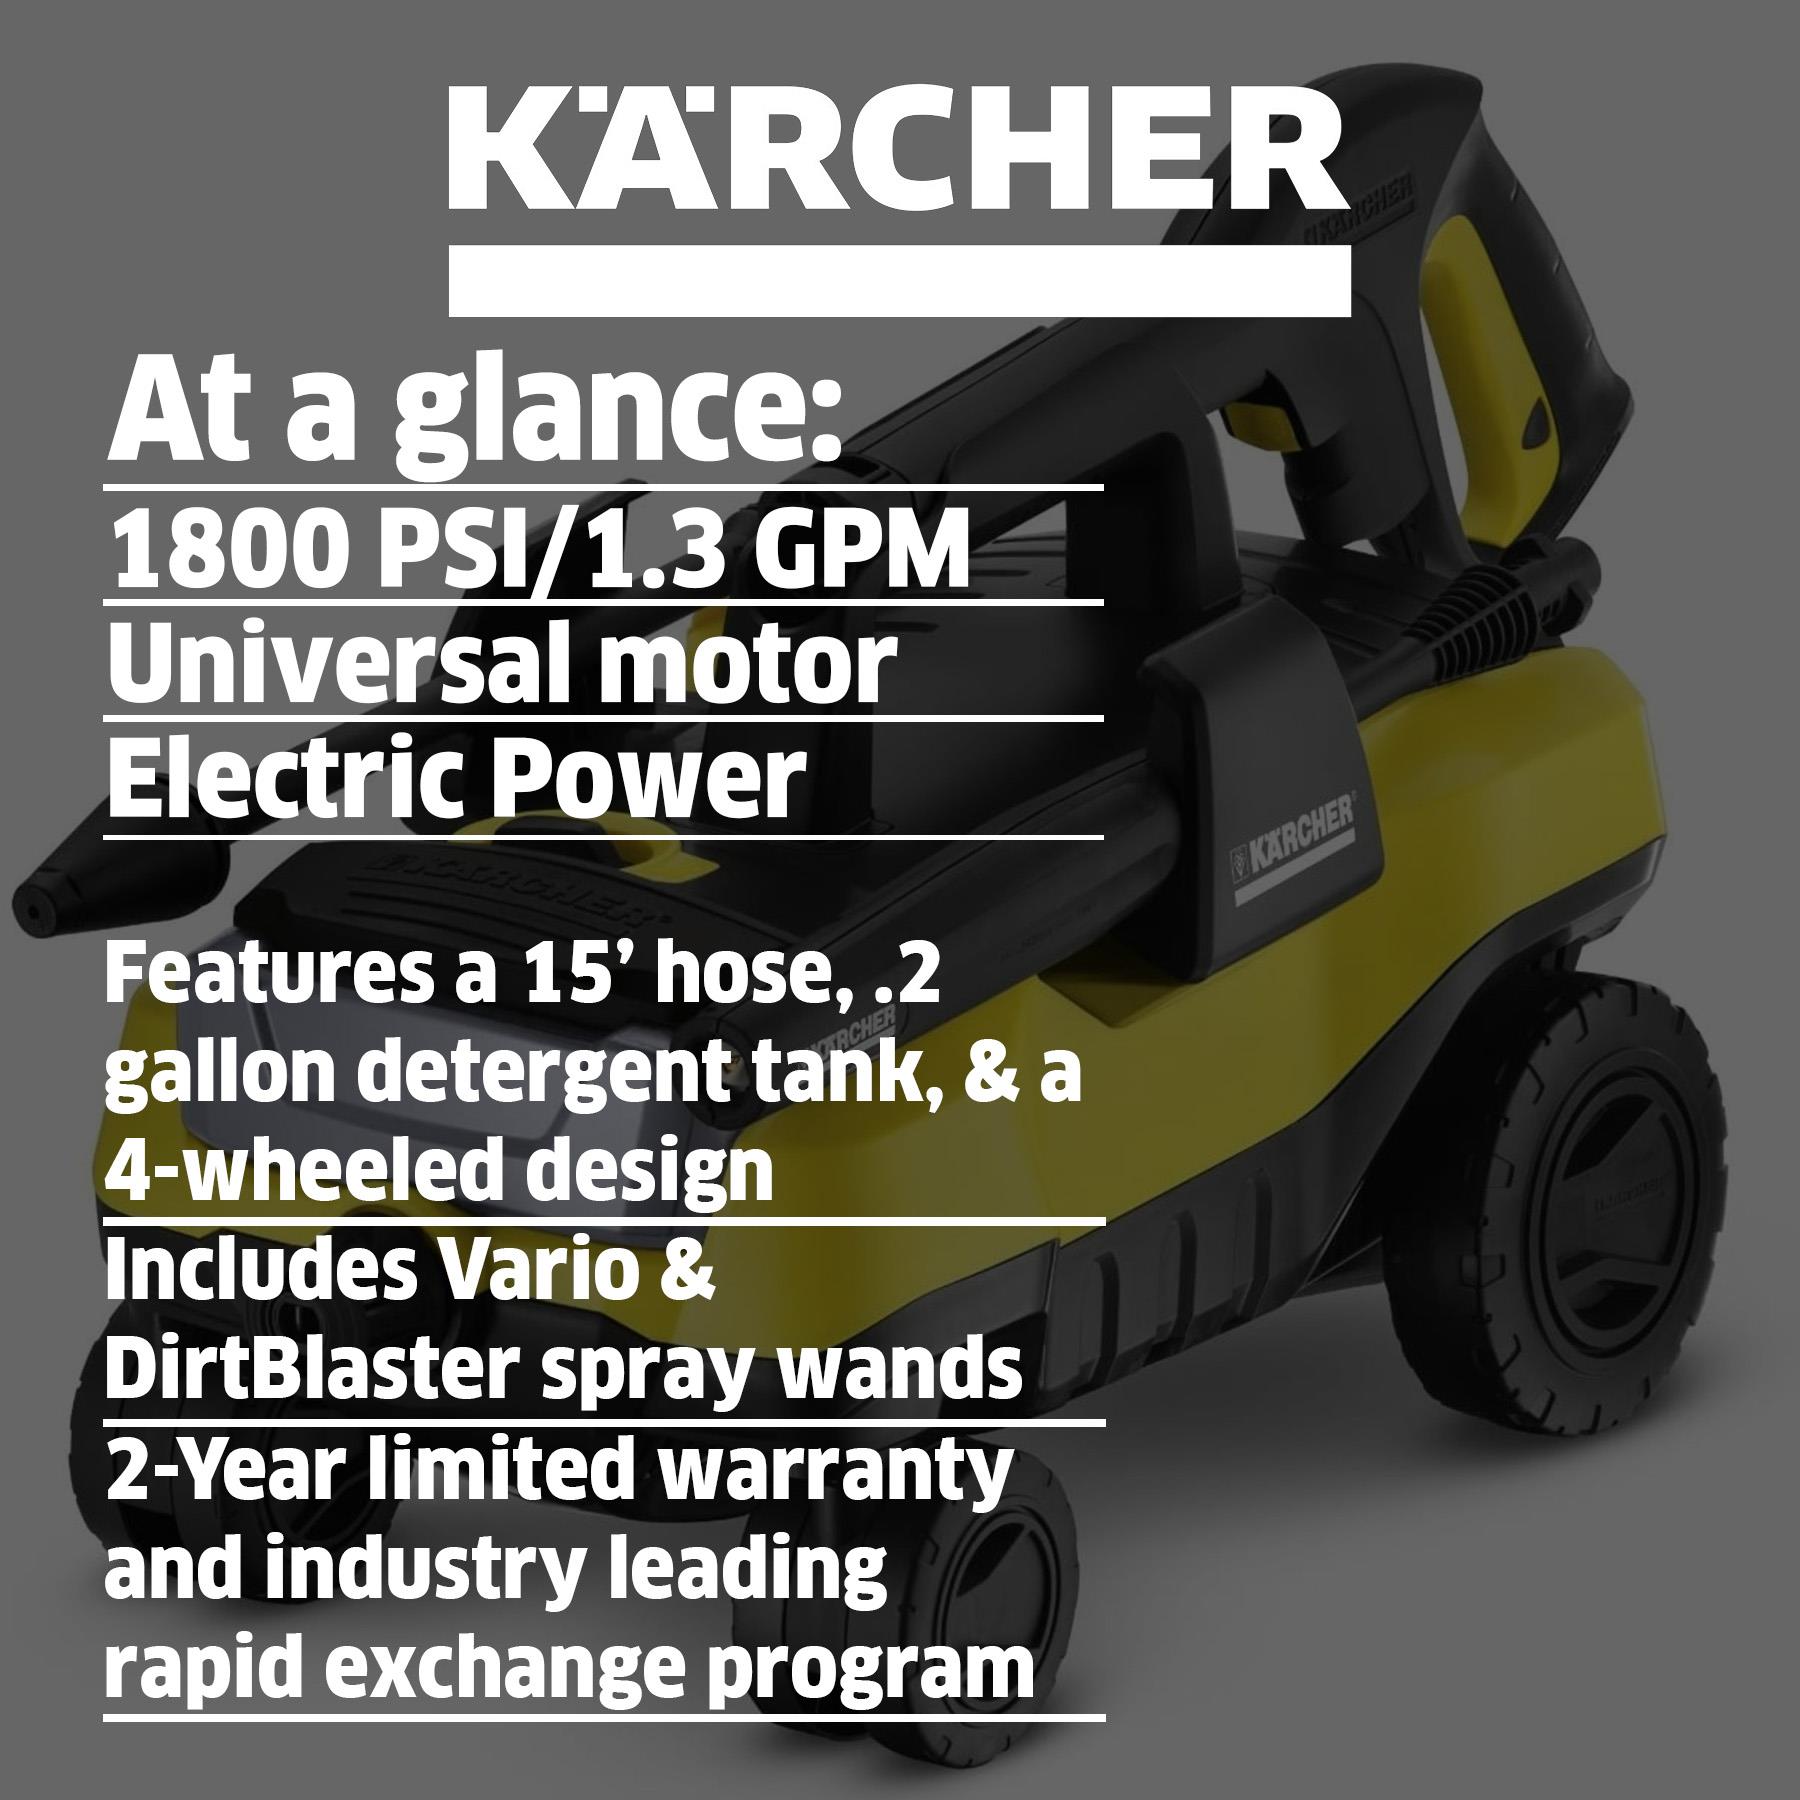 Karcher K 3 Power Control 1800 PSI 1.45 GPM Pressure Washer 